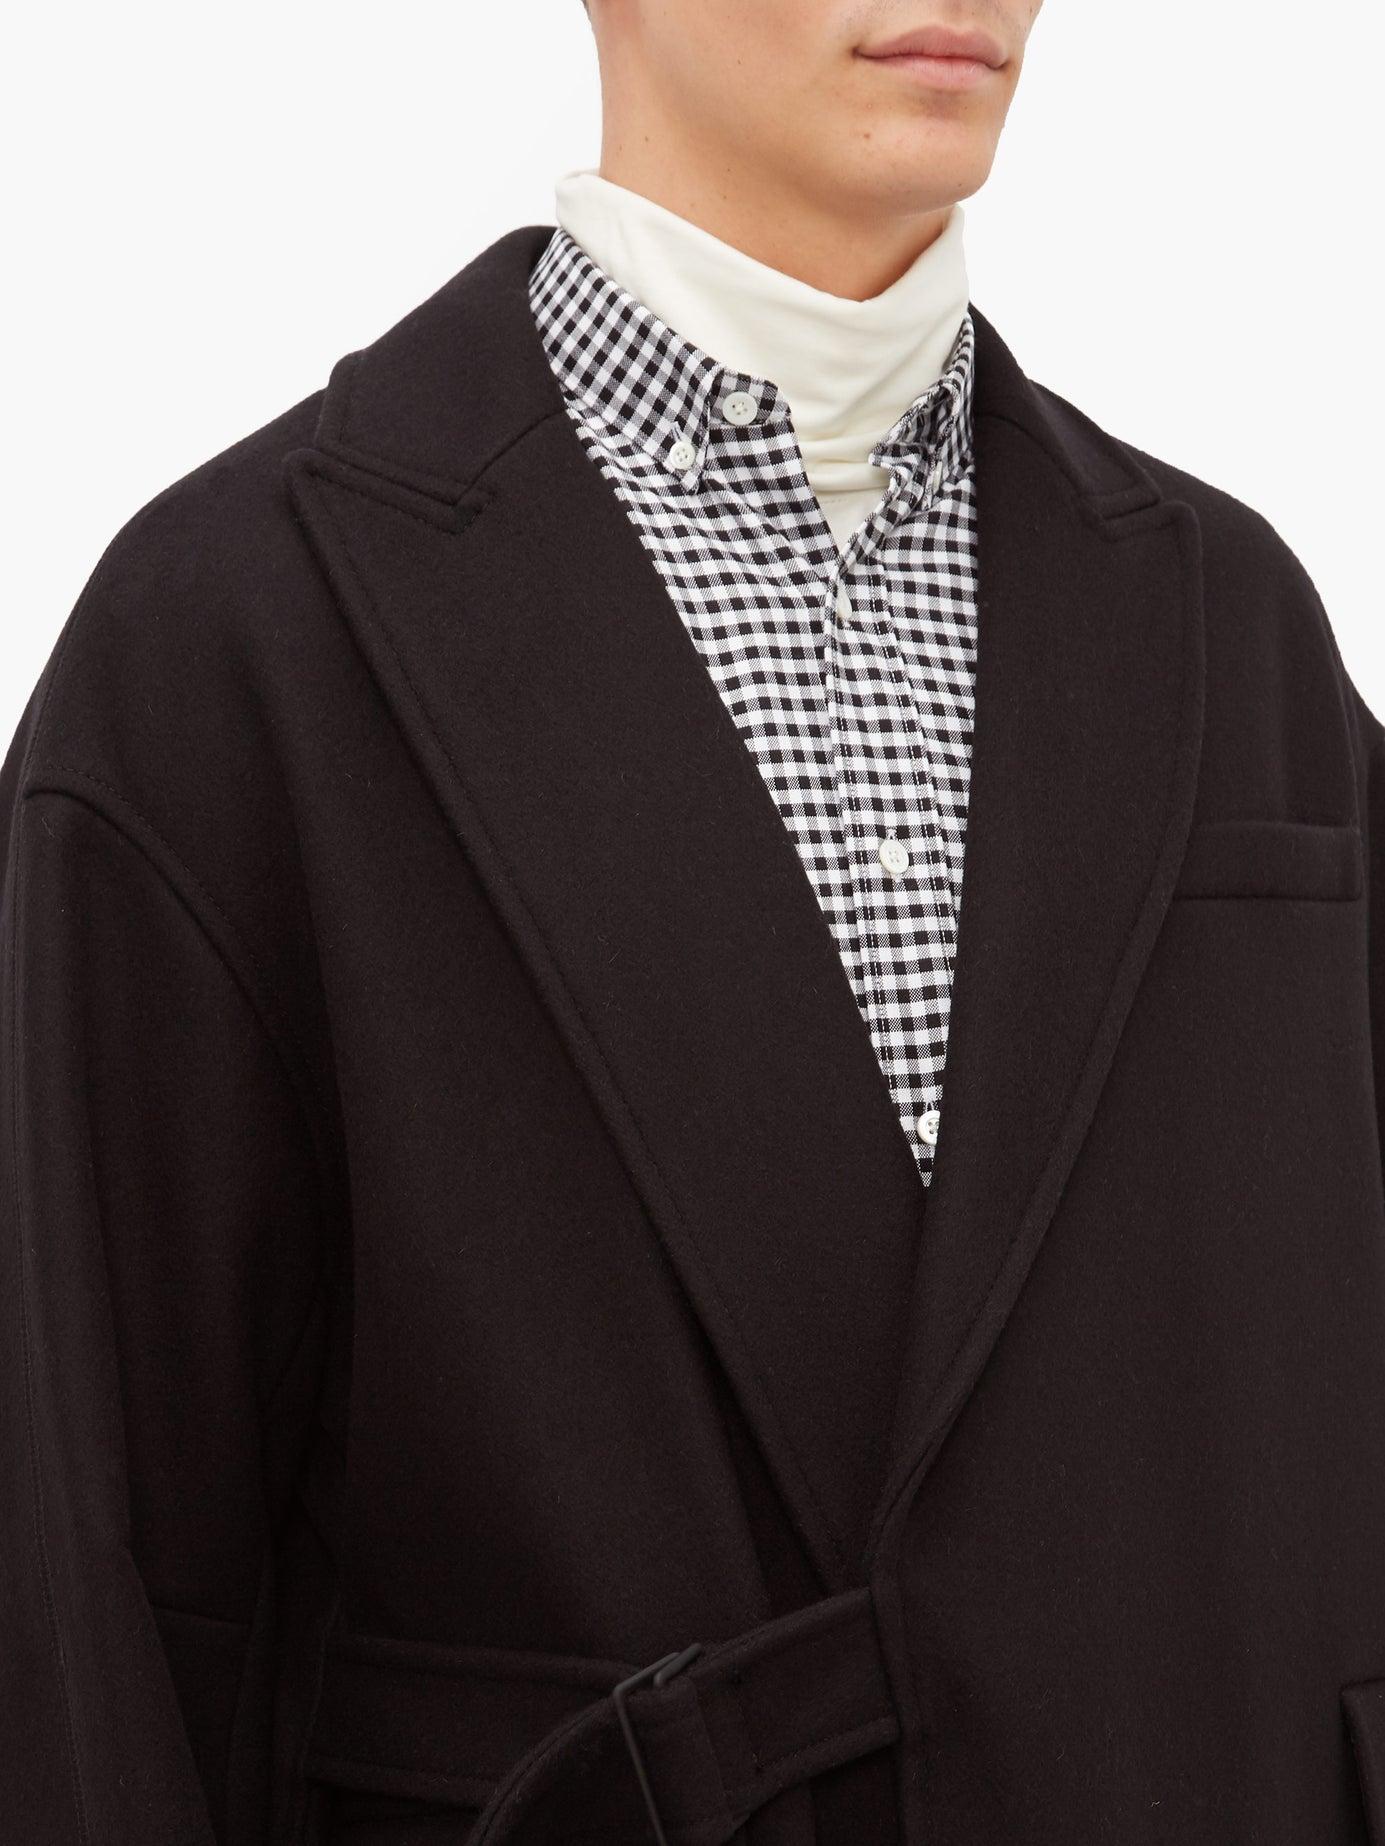 Maison Kitsuné Belted Wrap Coat in Black for Men | Lyst